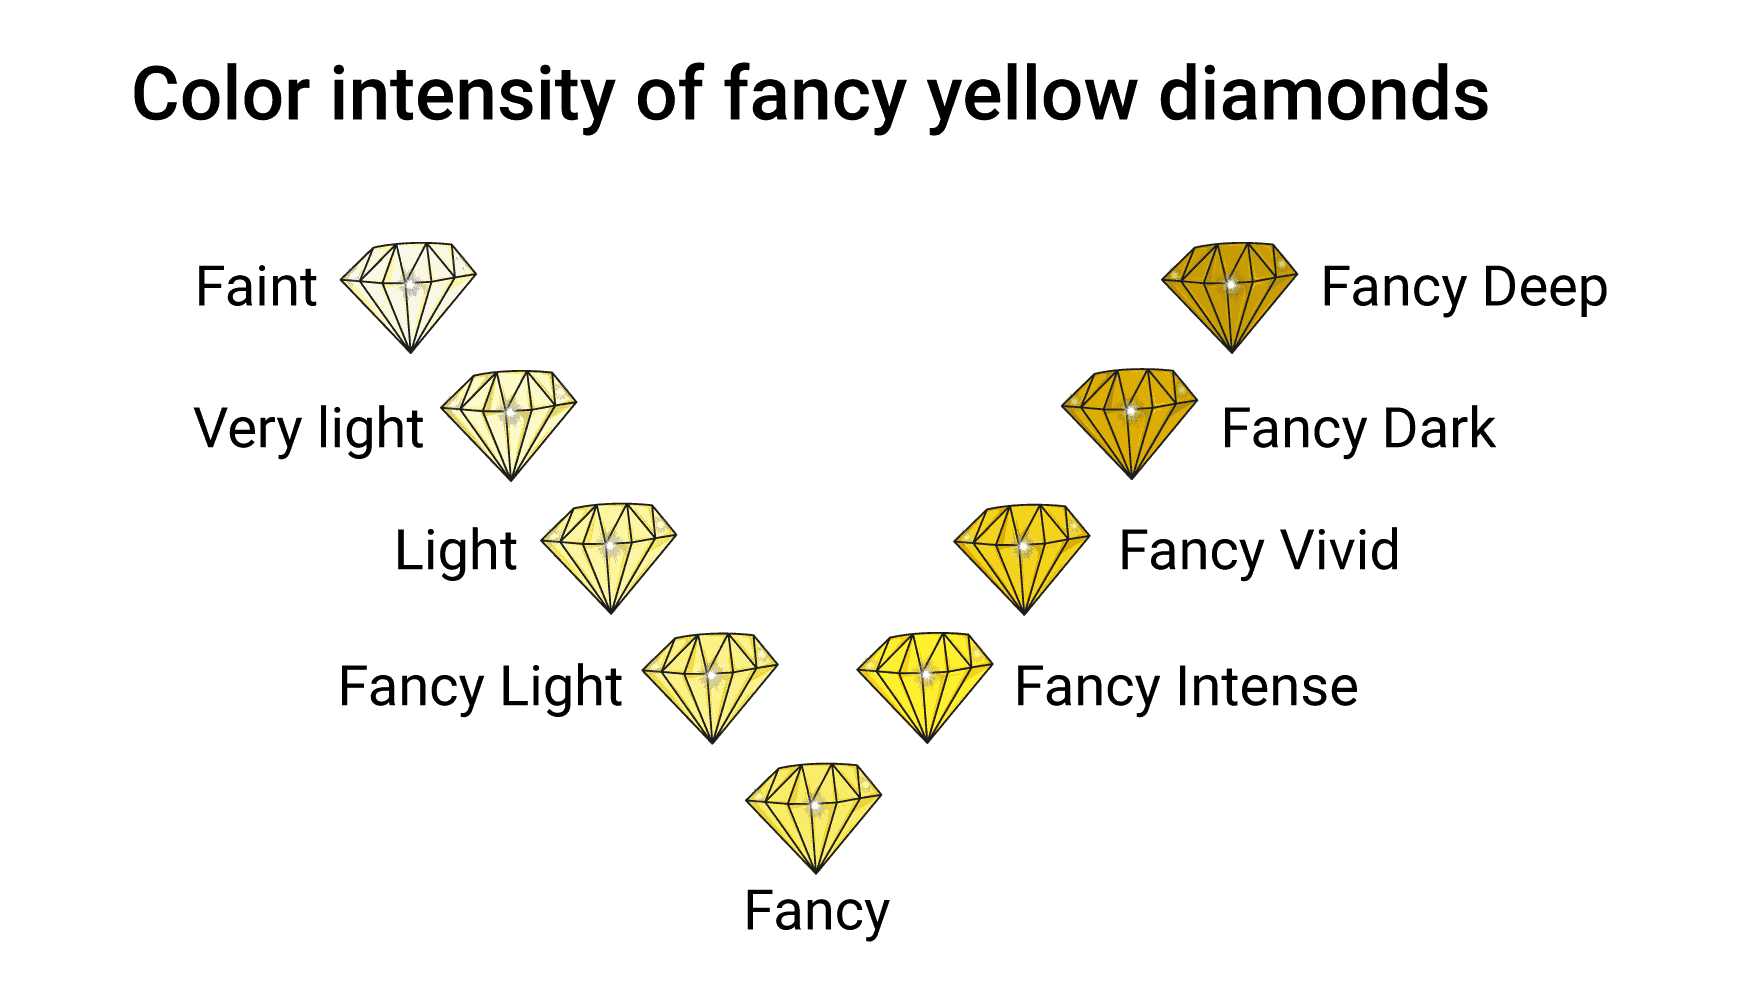 Yellow color diamonds - color intensity levels